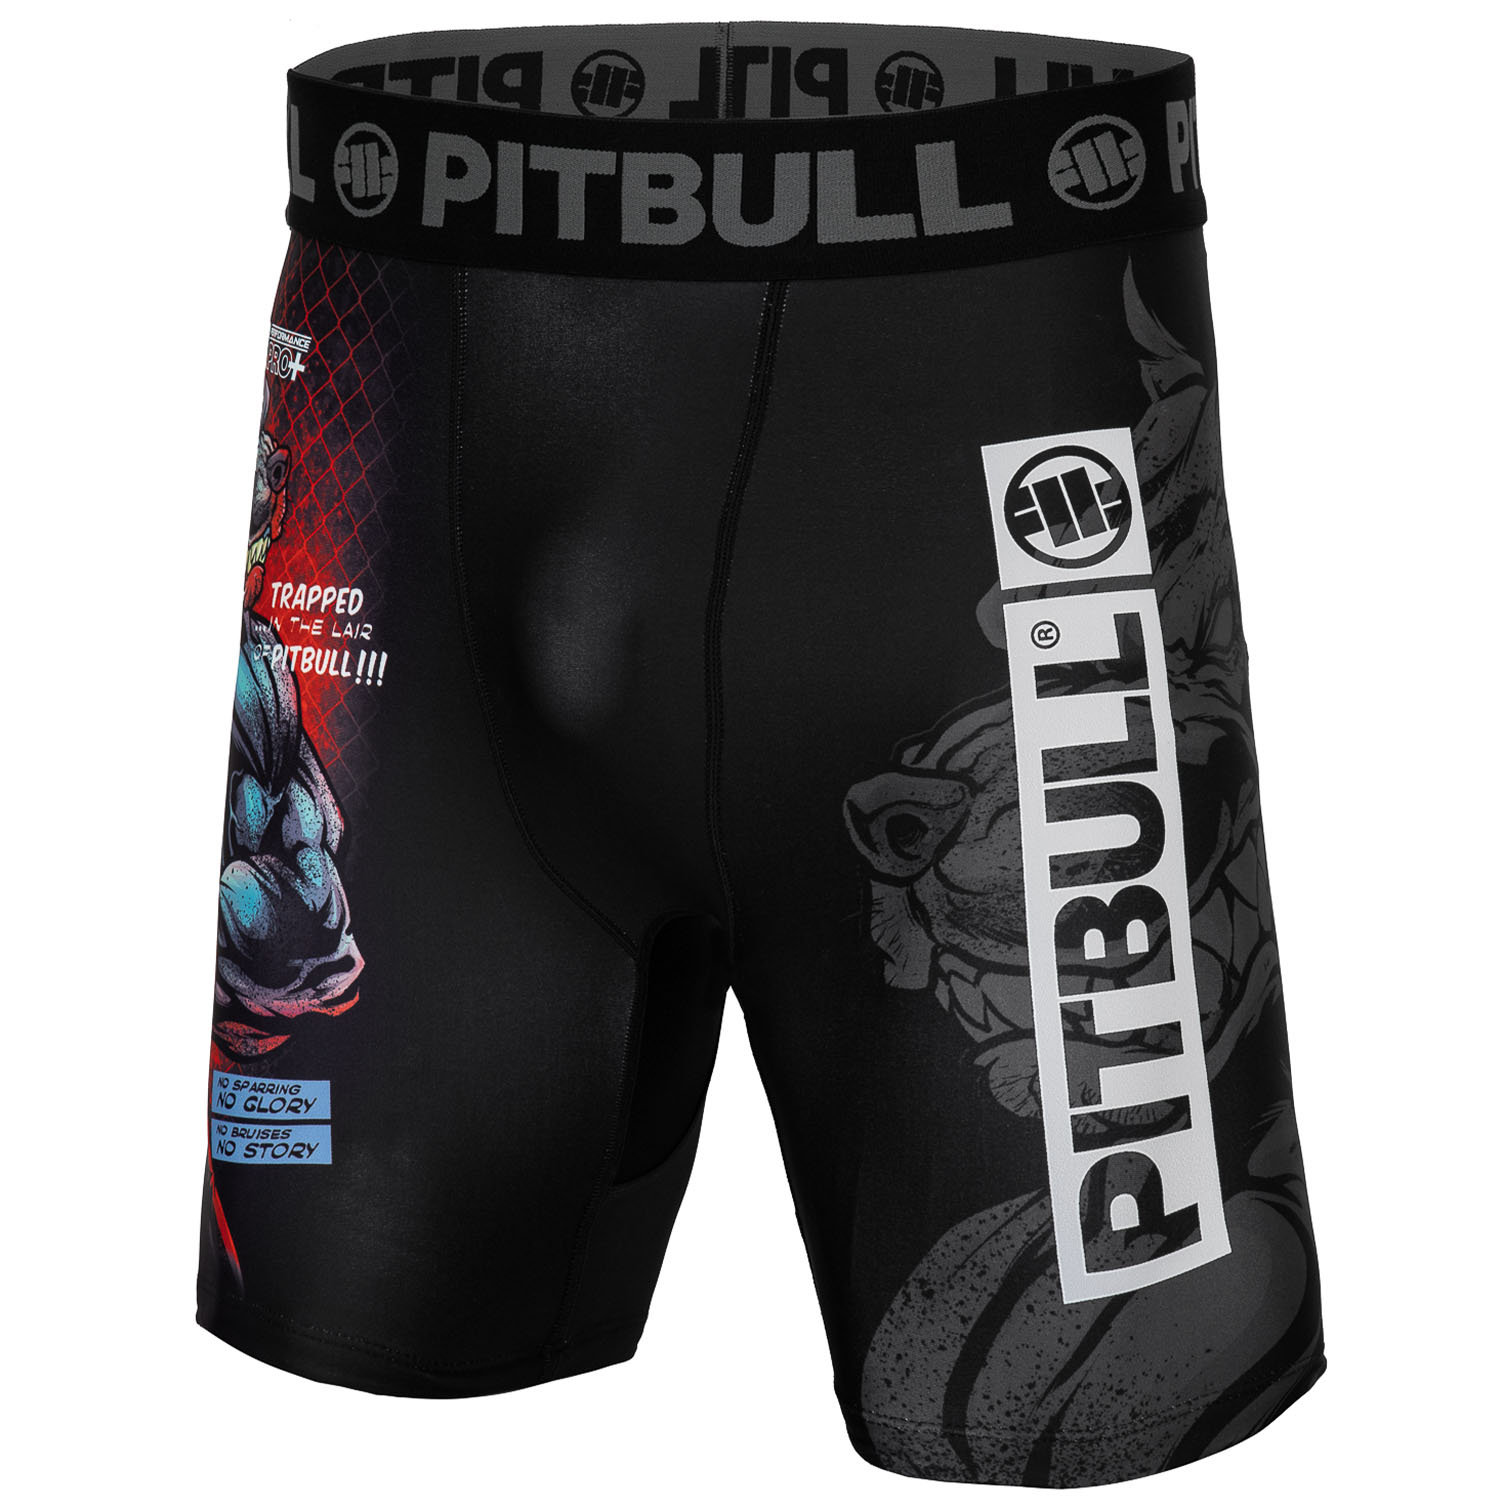 Pit Bull West Coast Compression Shorts, Masters Of MMA, schwarz